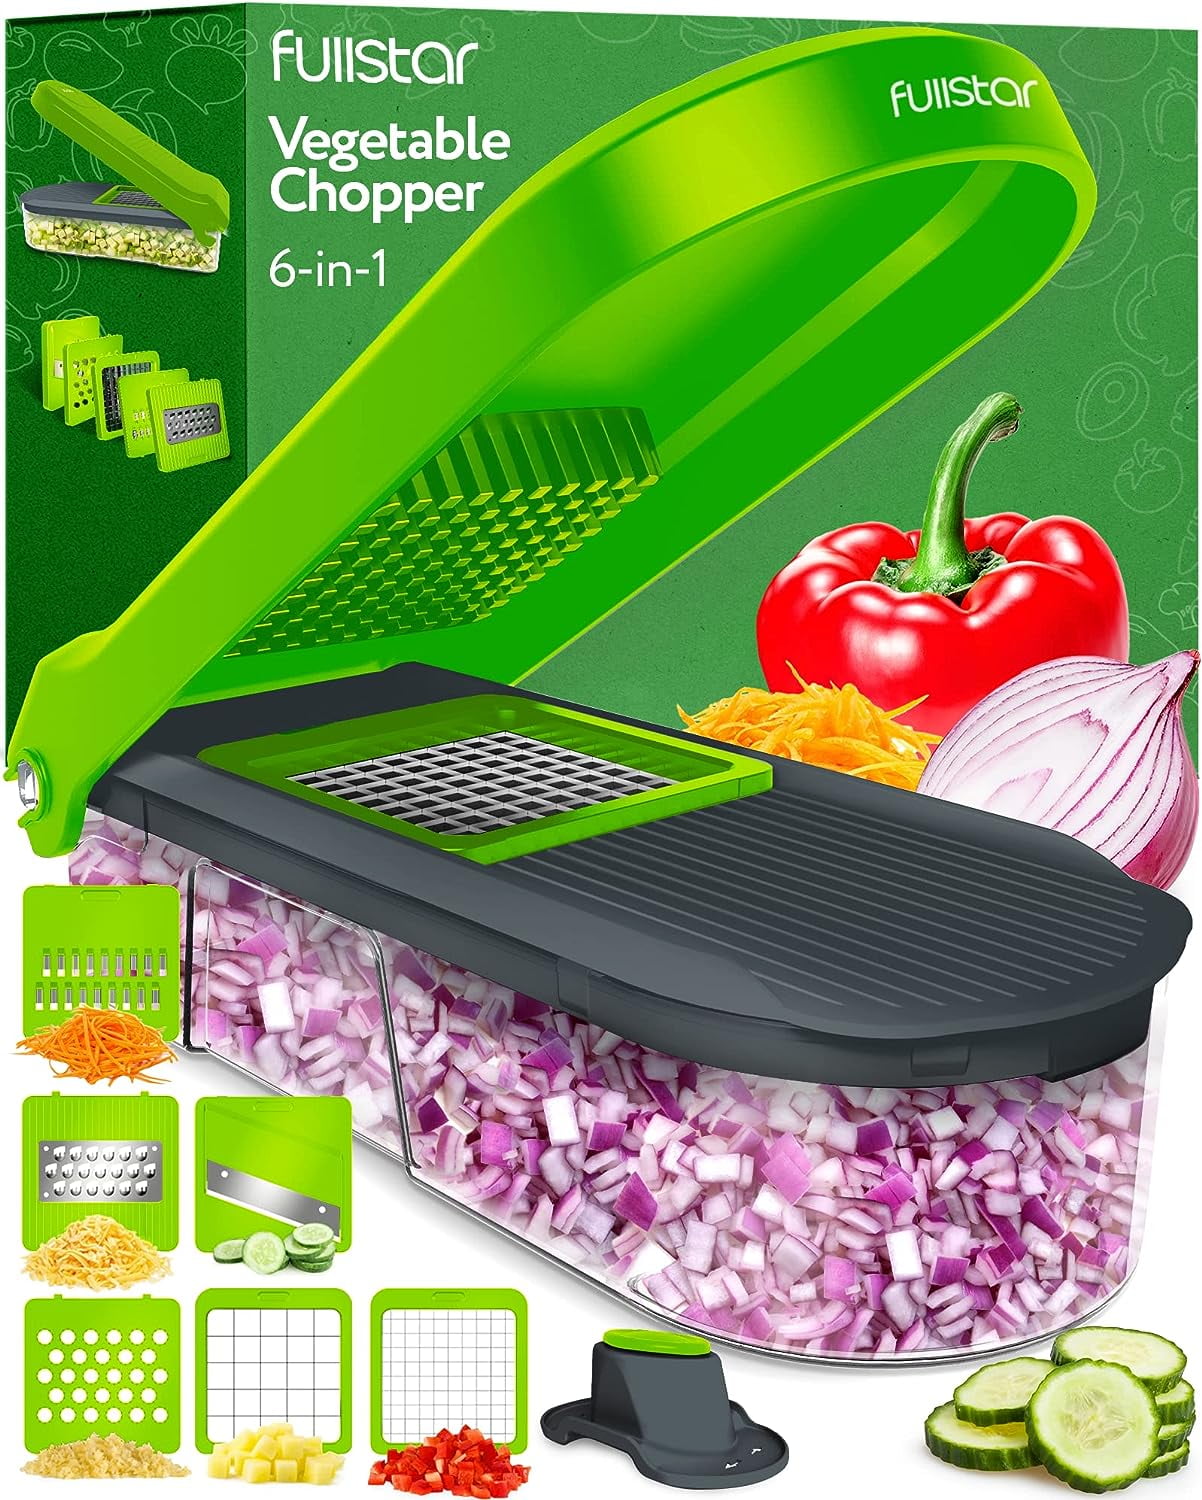 Fullstar Vegetable Chopper - Veggie Chopper - Onion Chopper with Container  - Pro Food Chopper - Slicer Dicer Cutter - (3 in 1, White)